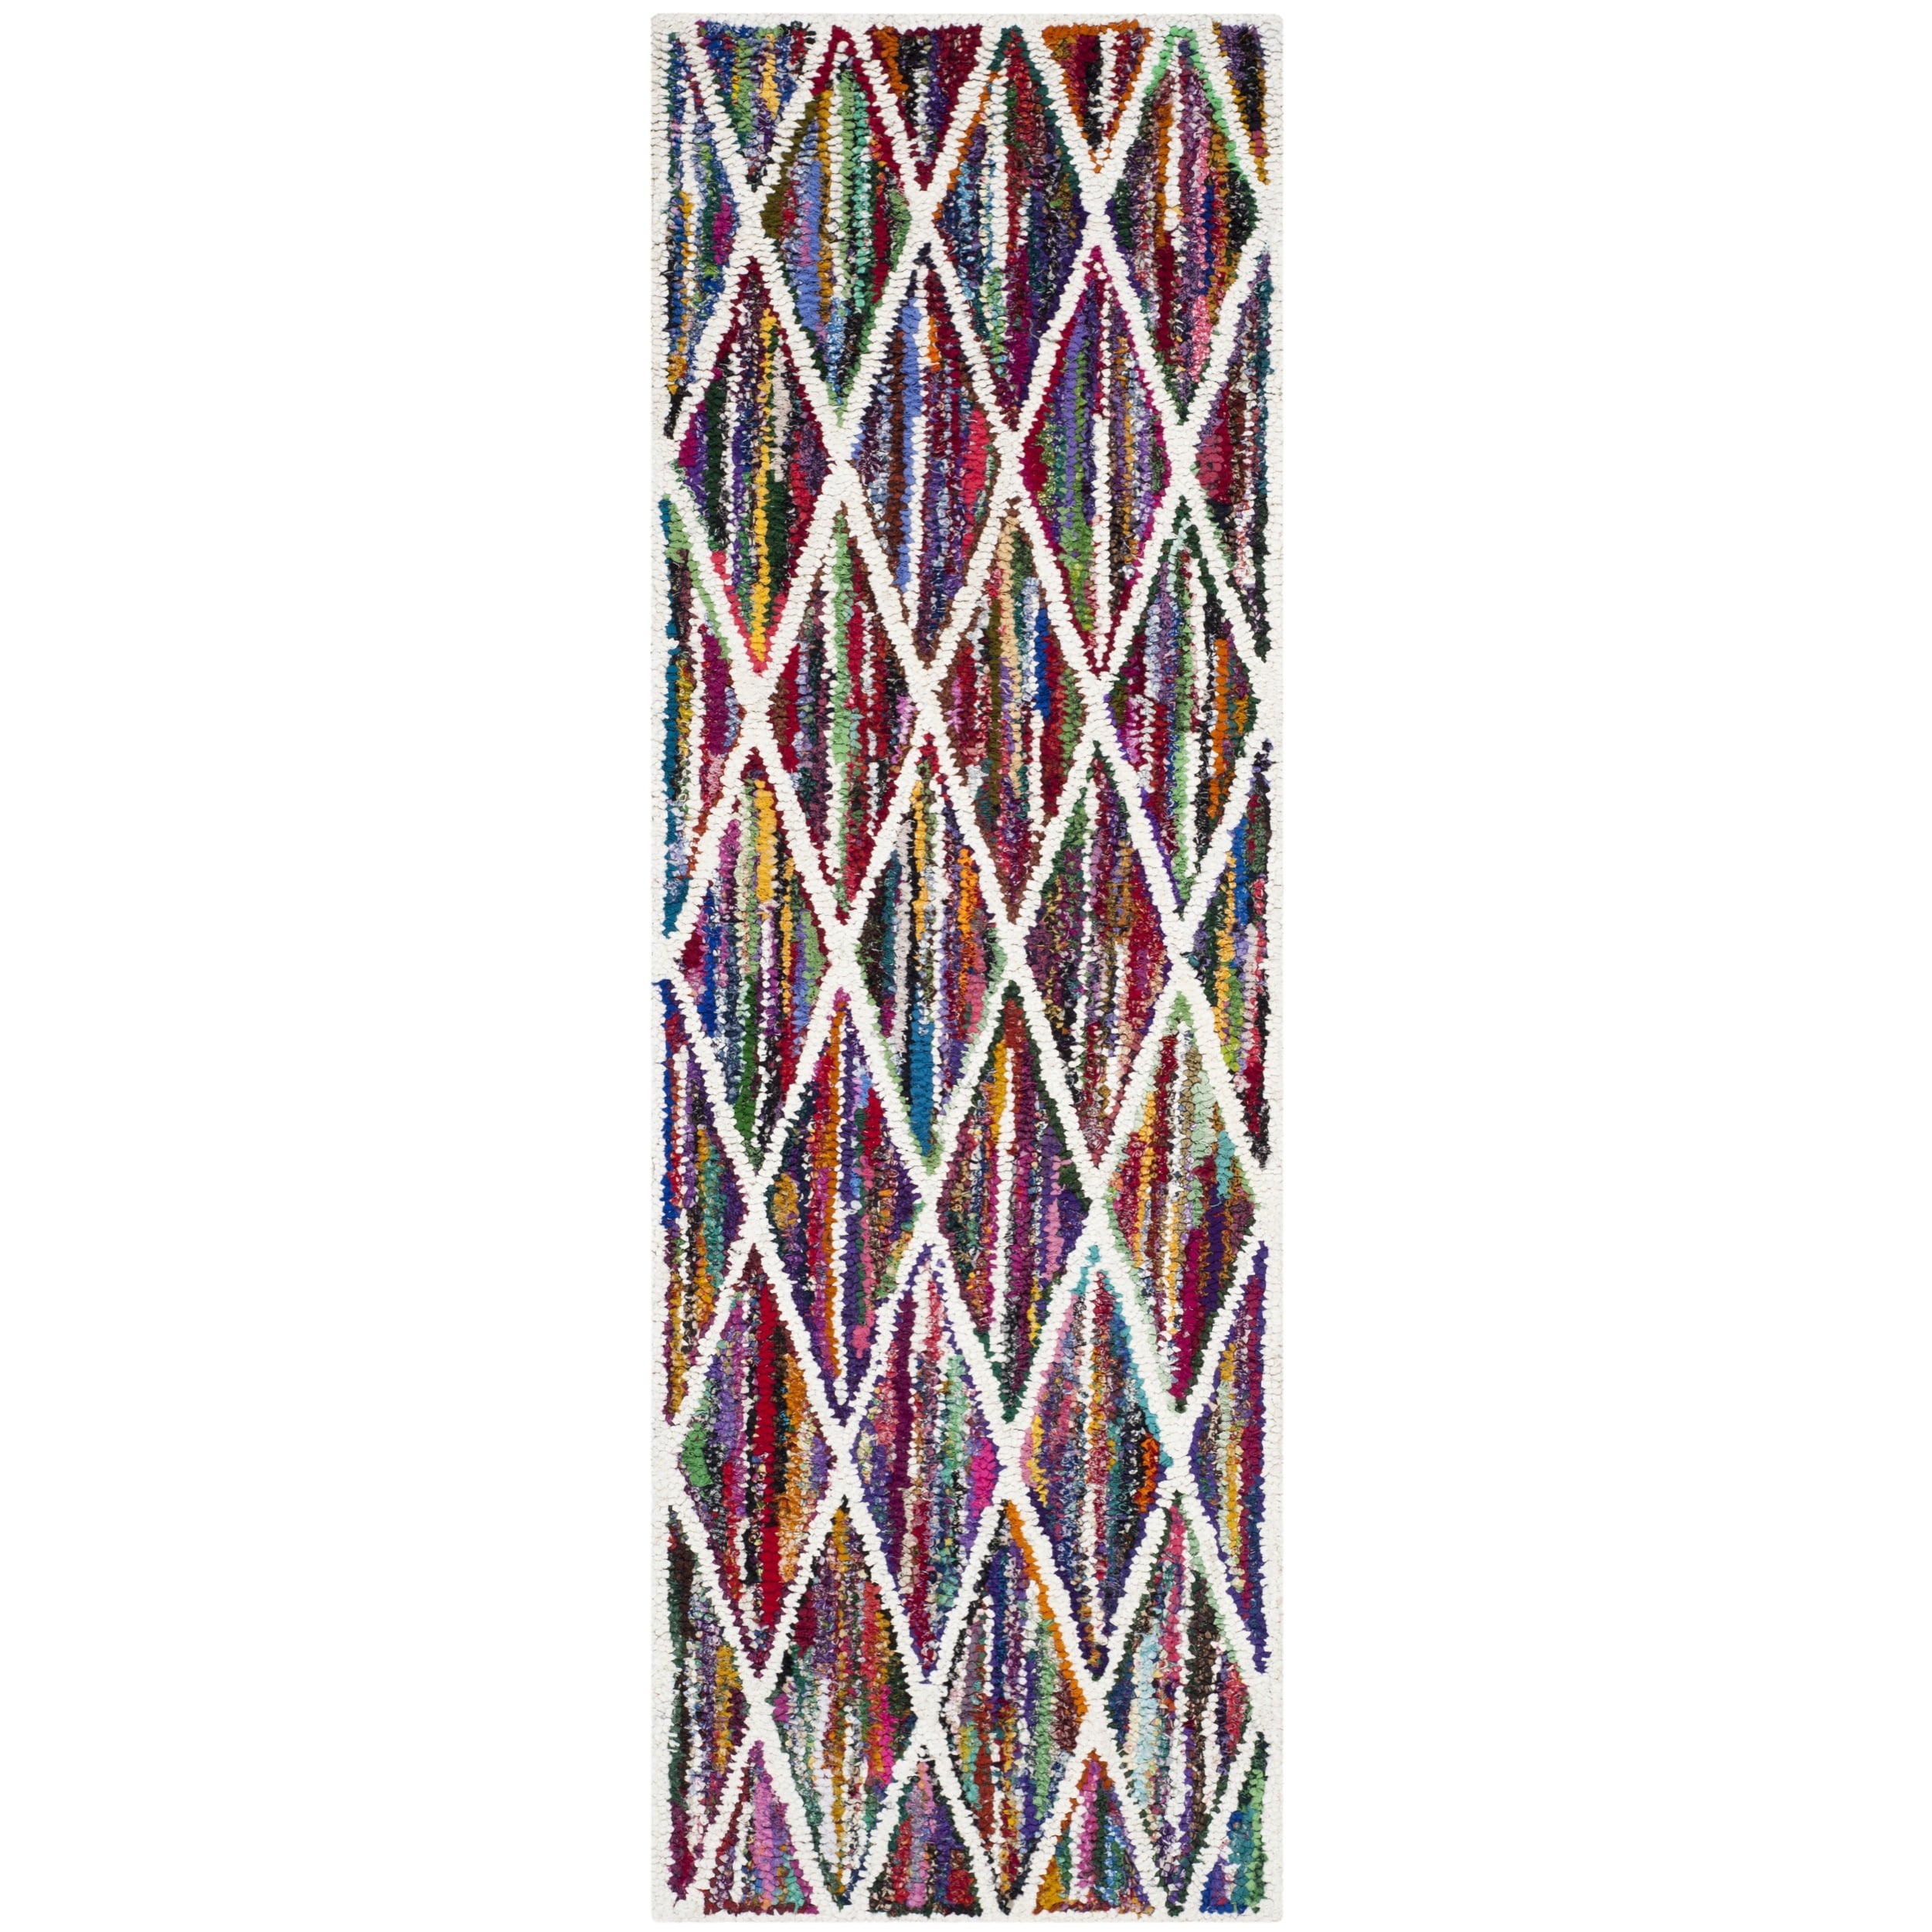 Safavieh Handmade Nantucket Multicolored Cotton Runner Rug (23 X 7)